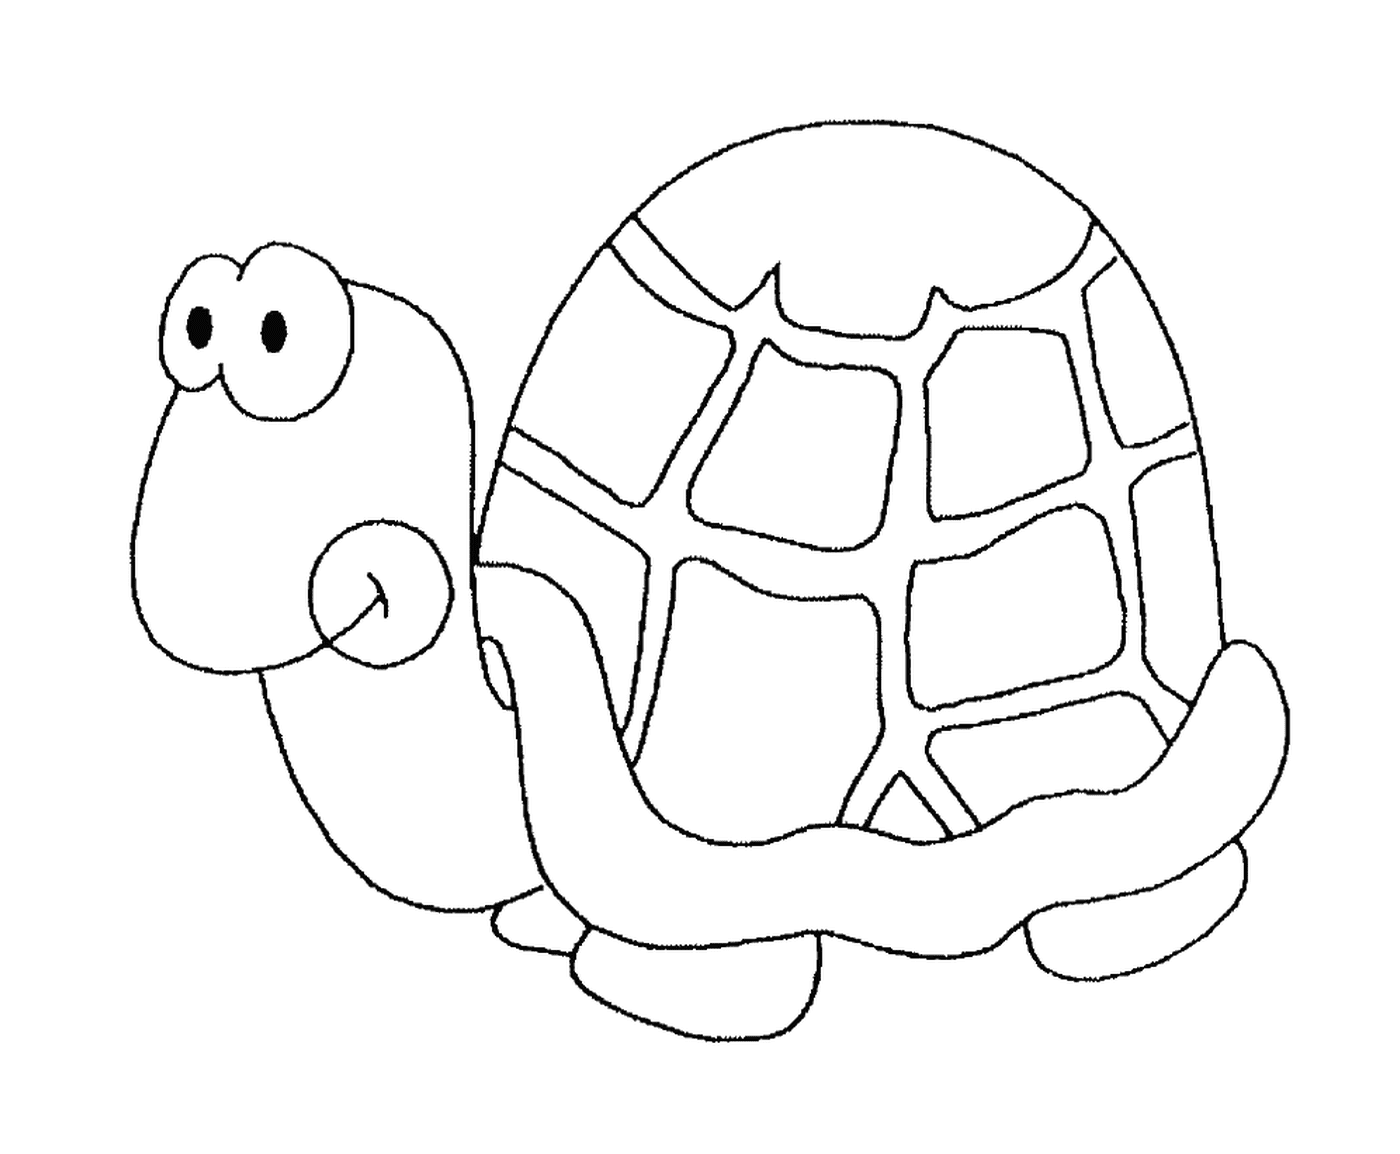  Uma tartaruga com uma concha redonda 